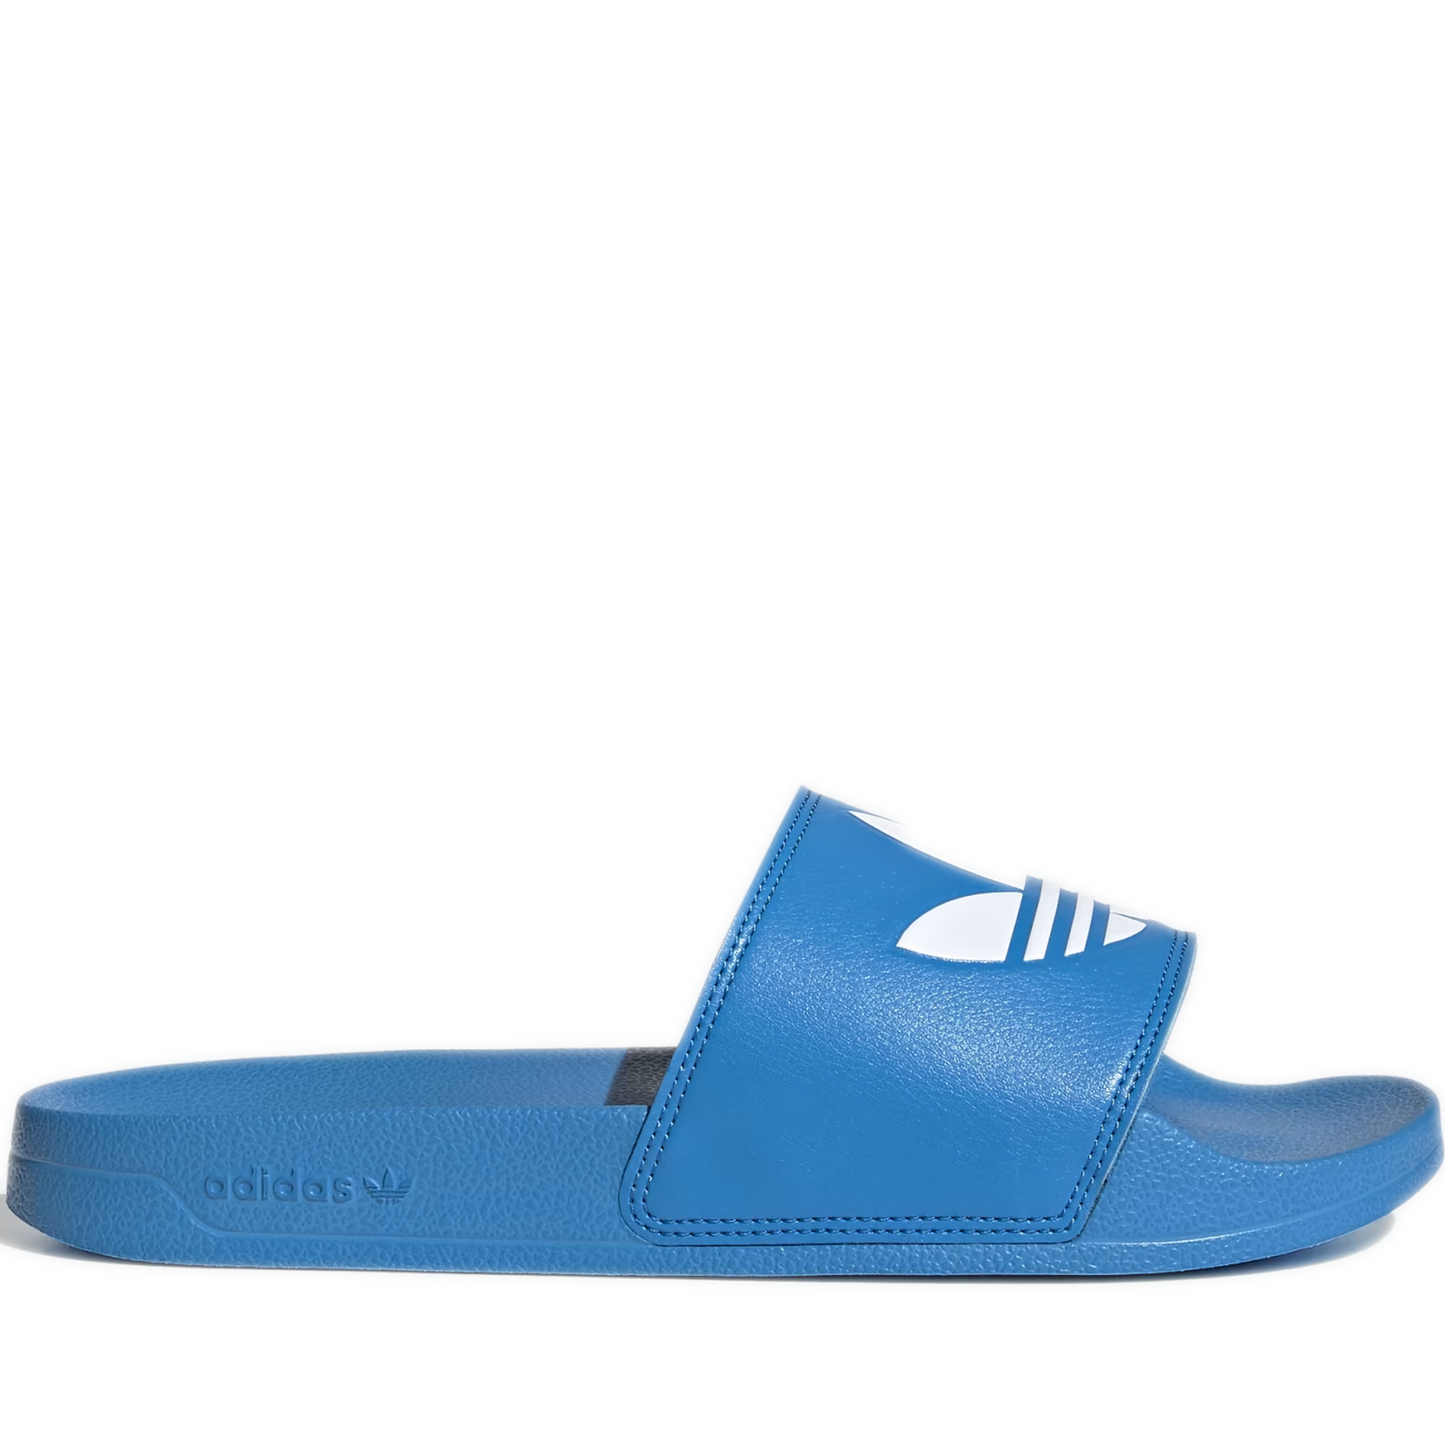 Men's Adidas Adilette Lite Slides - Bright Blue